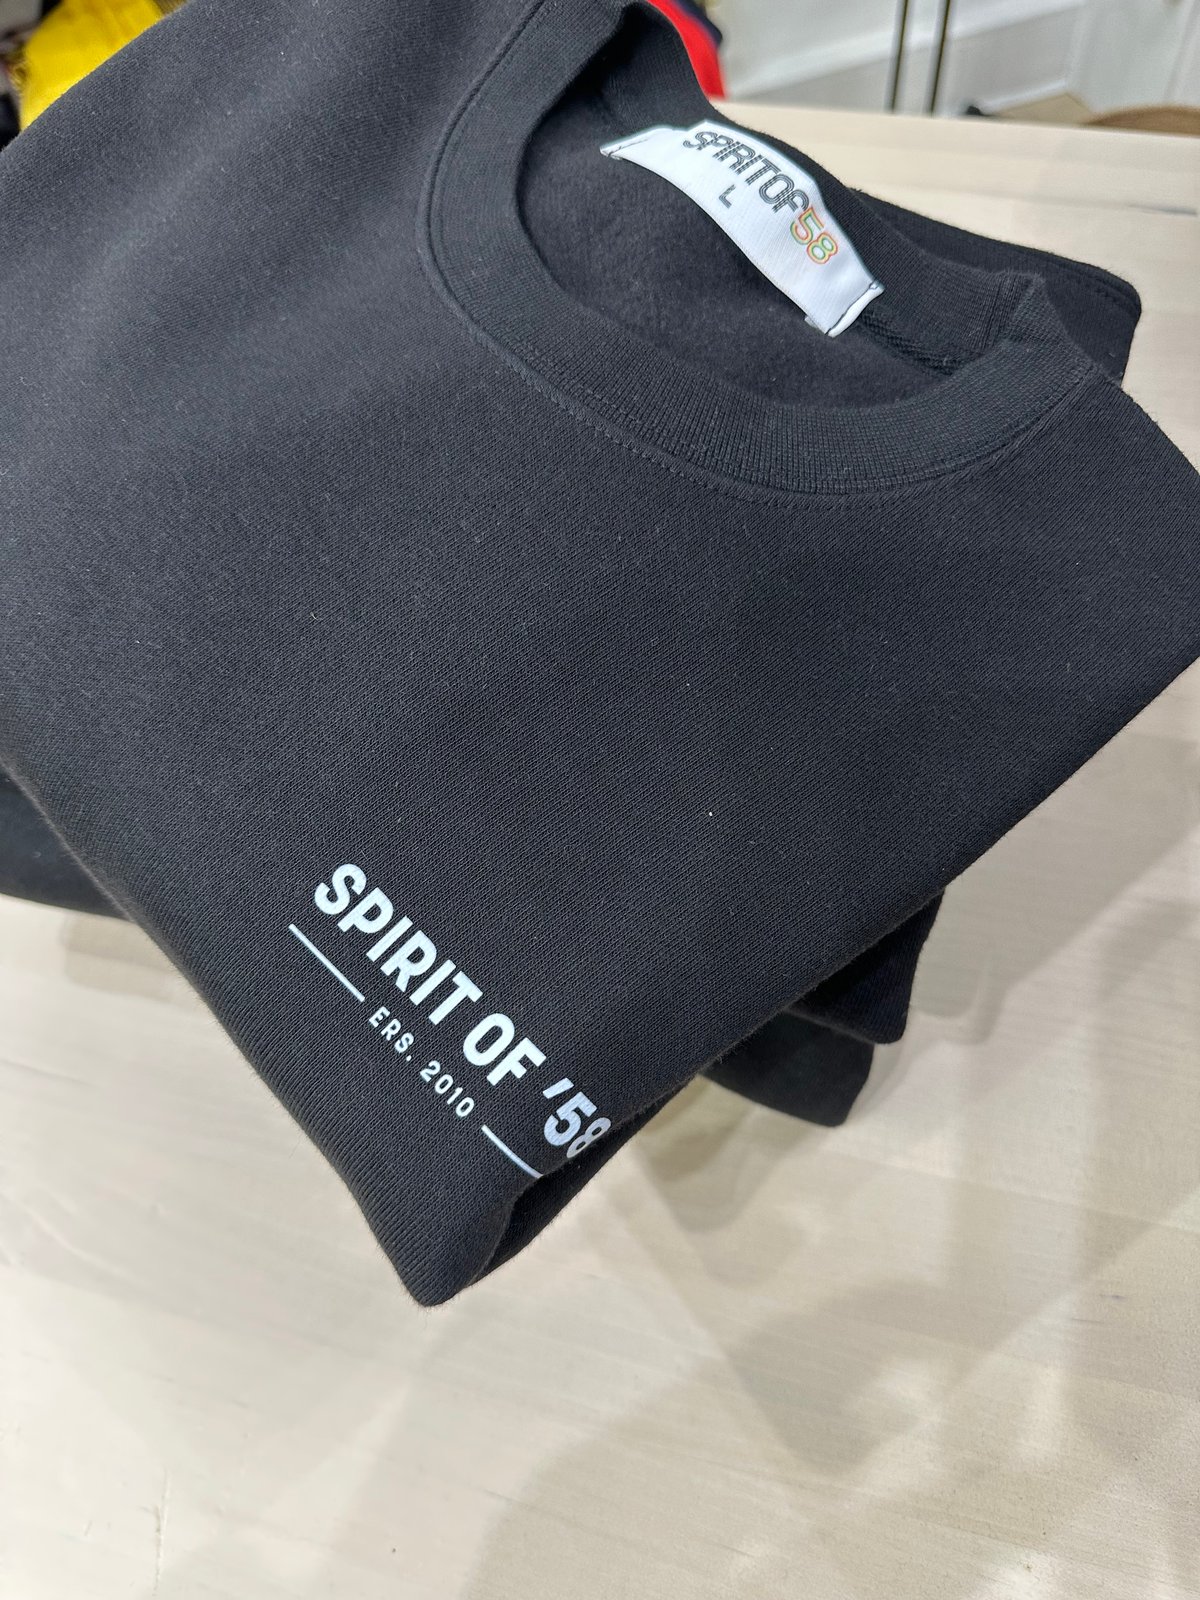 Image of Spirit of ‘58 Ers. 2010 Unisex Sweatshirt in Black 